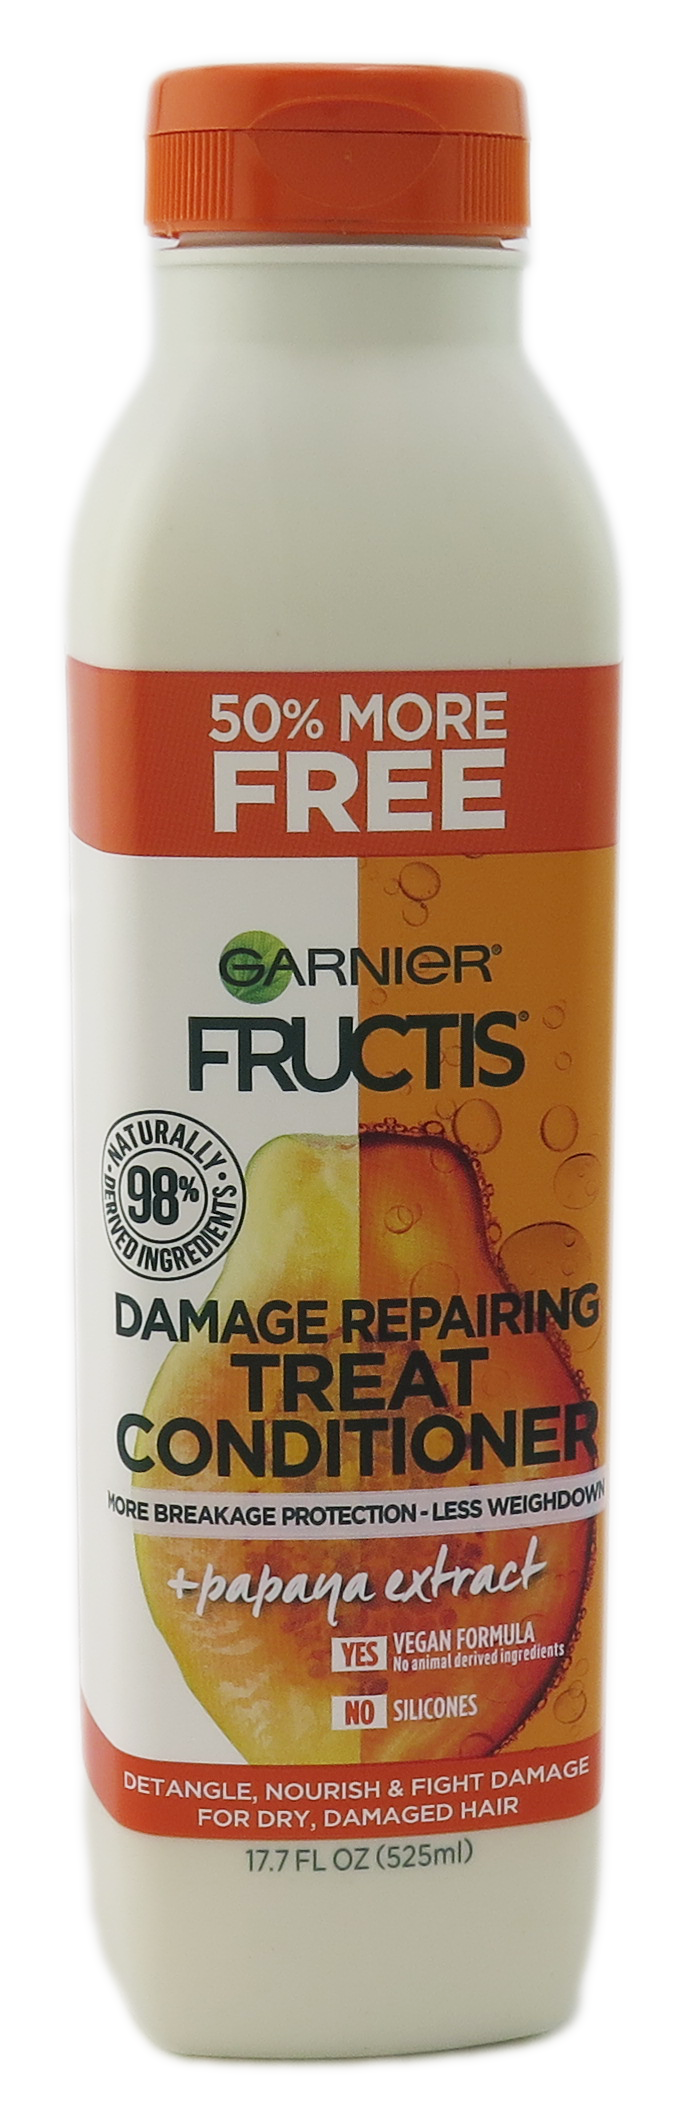 Garnier Fructis Damage Repairing Treat Conditioner + Papaya Extract 17.7 fl oz